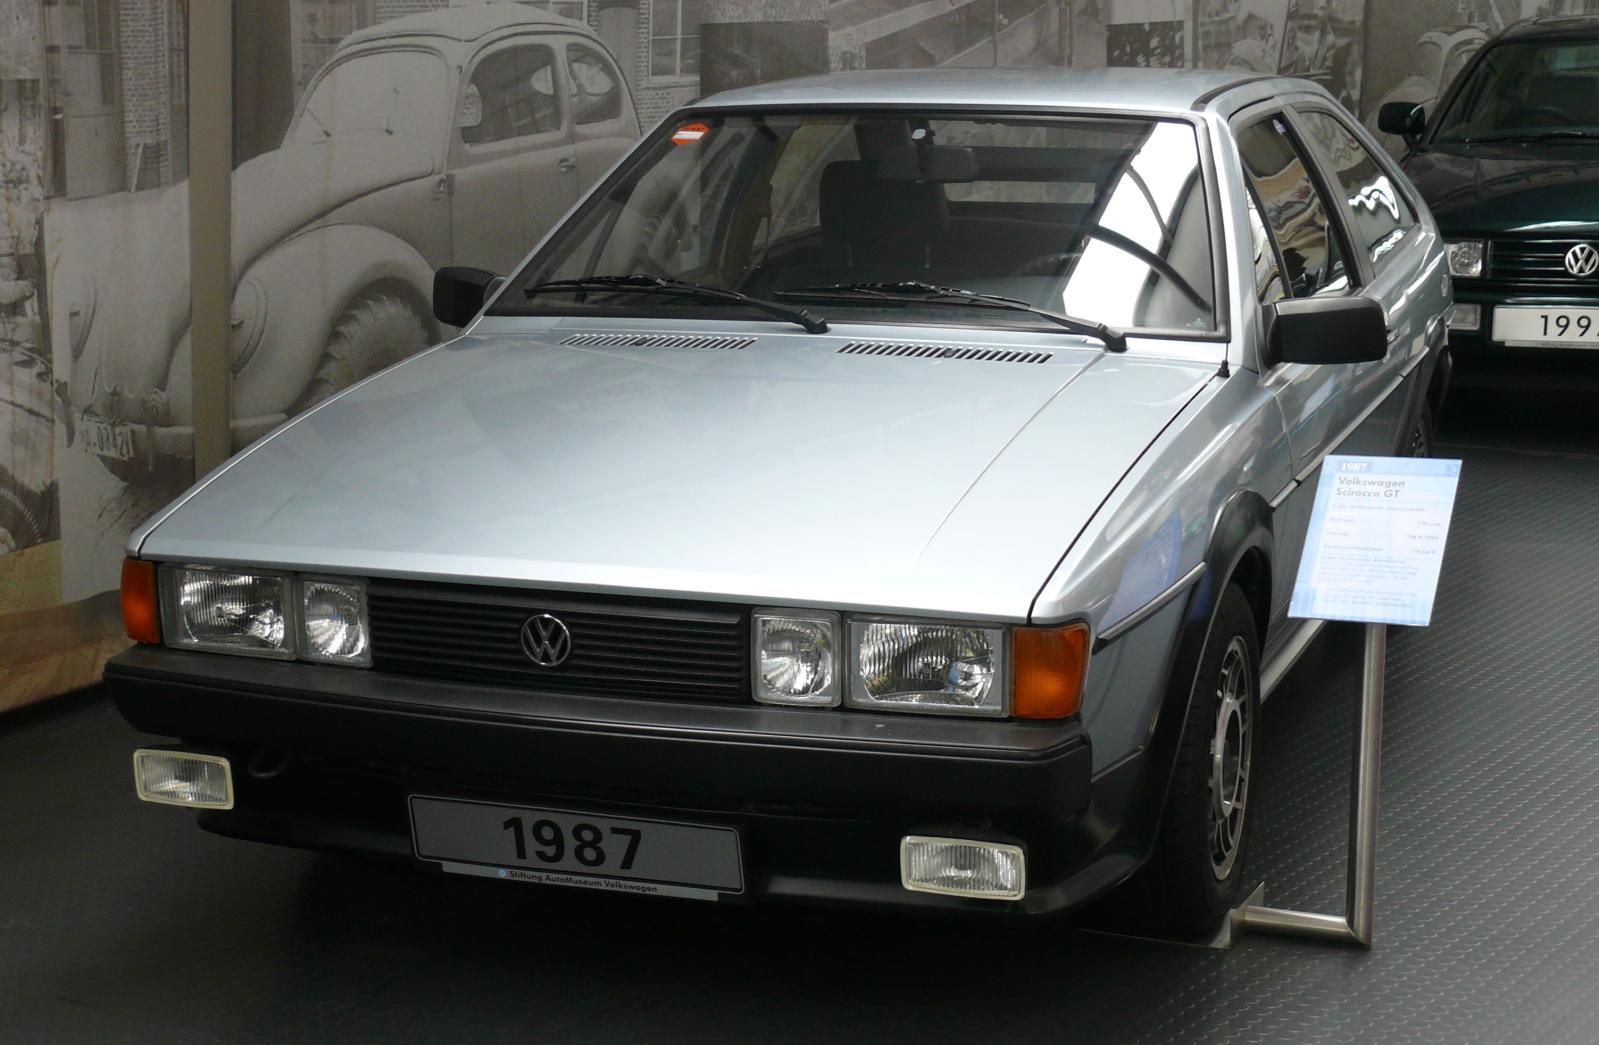 VW Volkswagen Scirocco GT 1987 silver vl | Flickr - Photo Sharing!